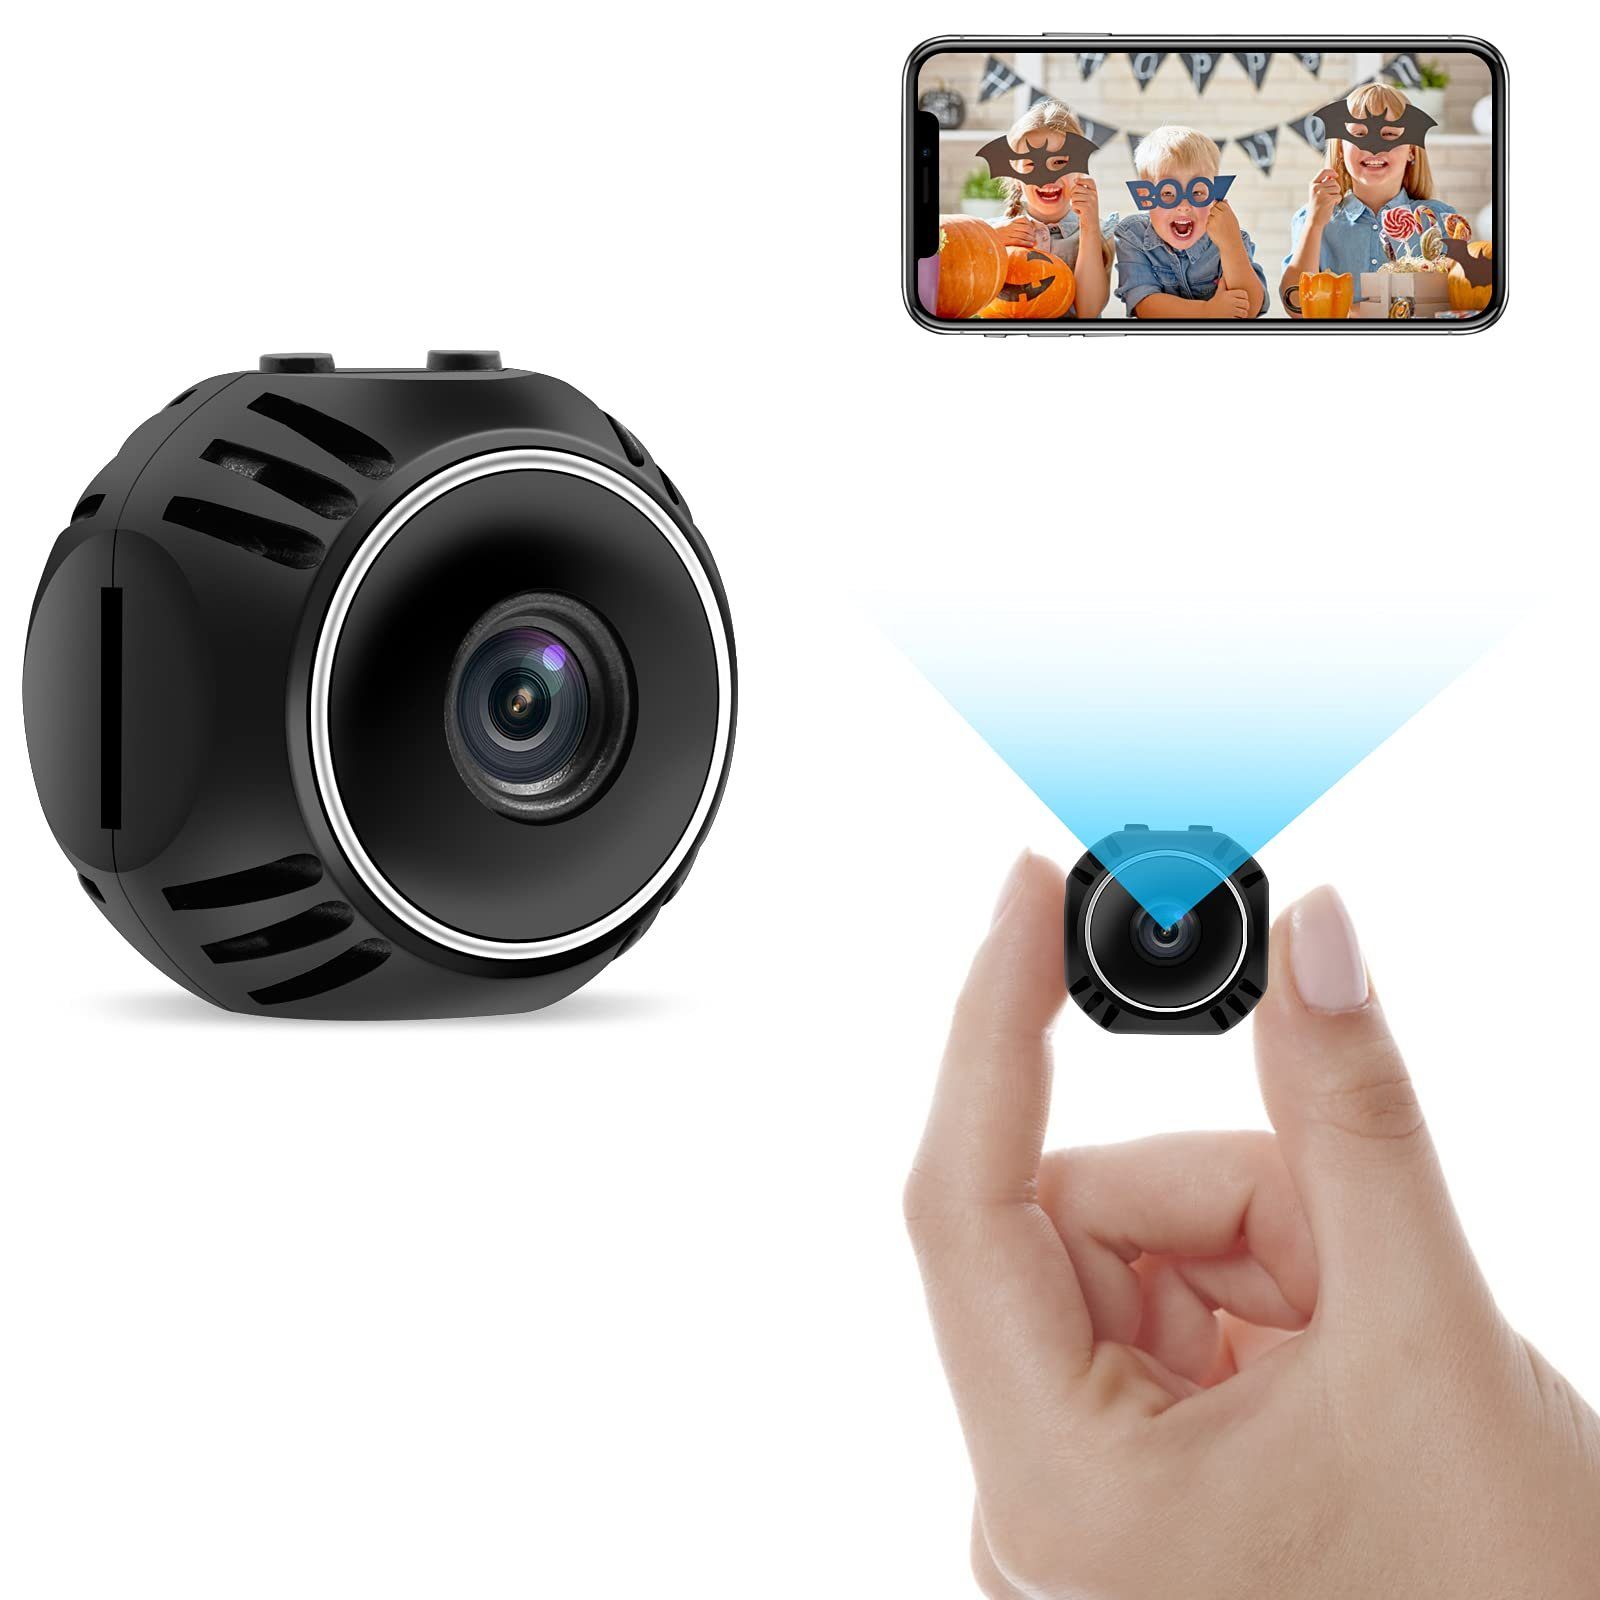 uberwachungskamera wifi set-sicherheits kamera wifi aussen-bewegungs kamera 